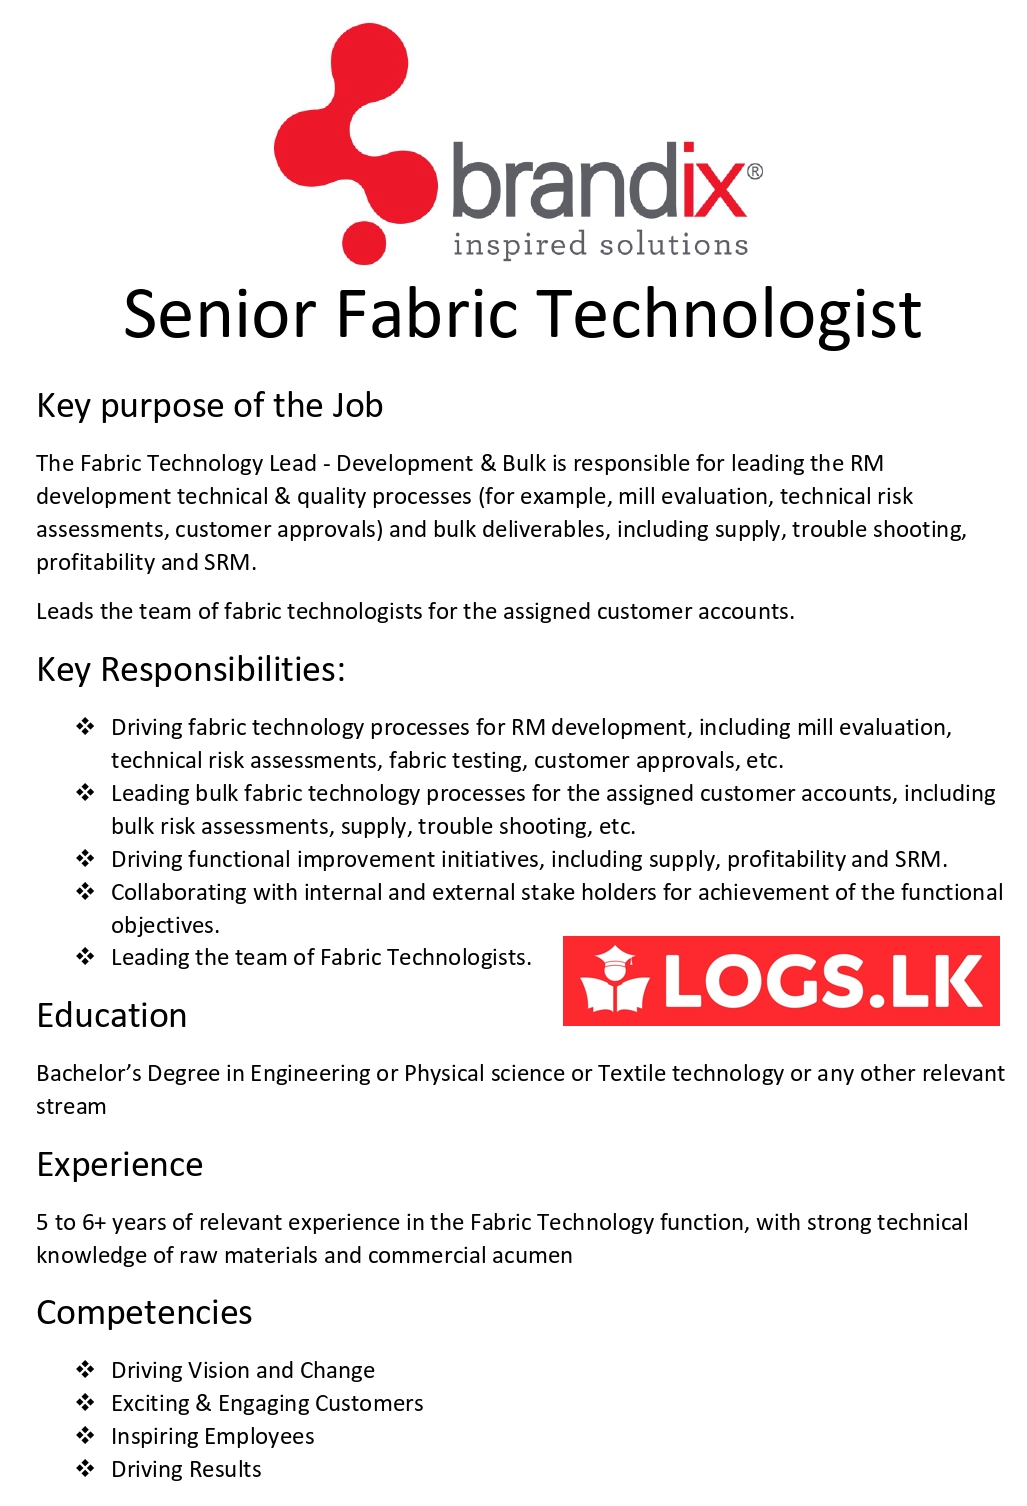 Senior Fabric Technologist Jobs Vacancies - Brandix Sri Lanka Jobs Vacancies Details